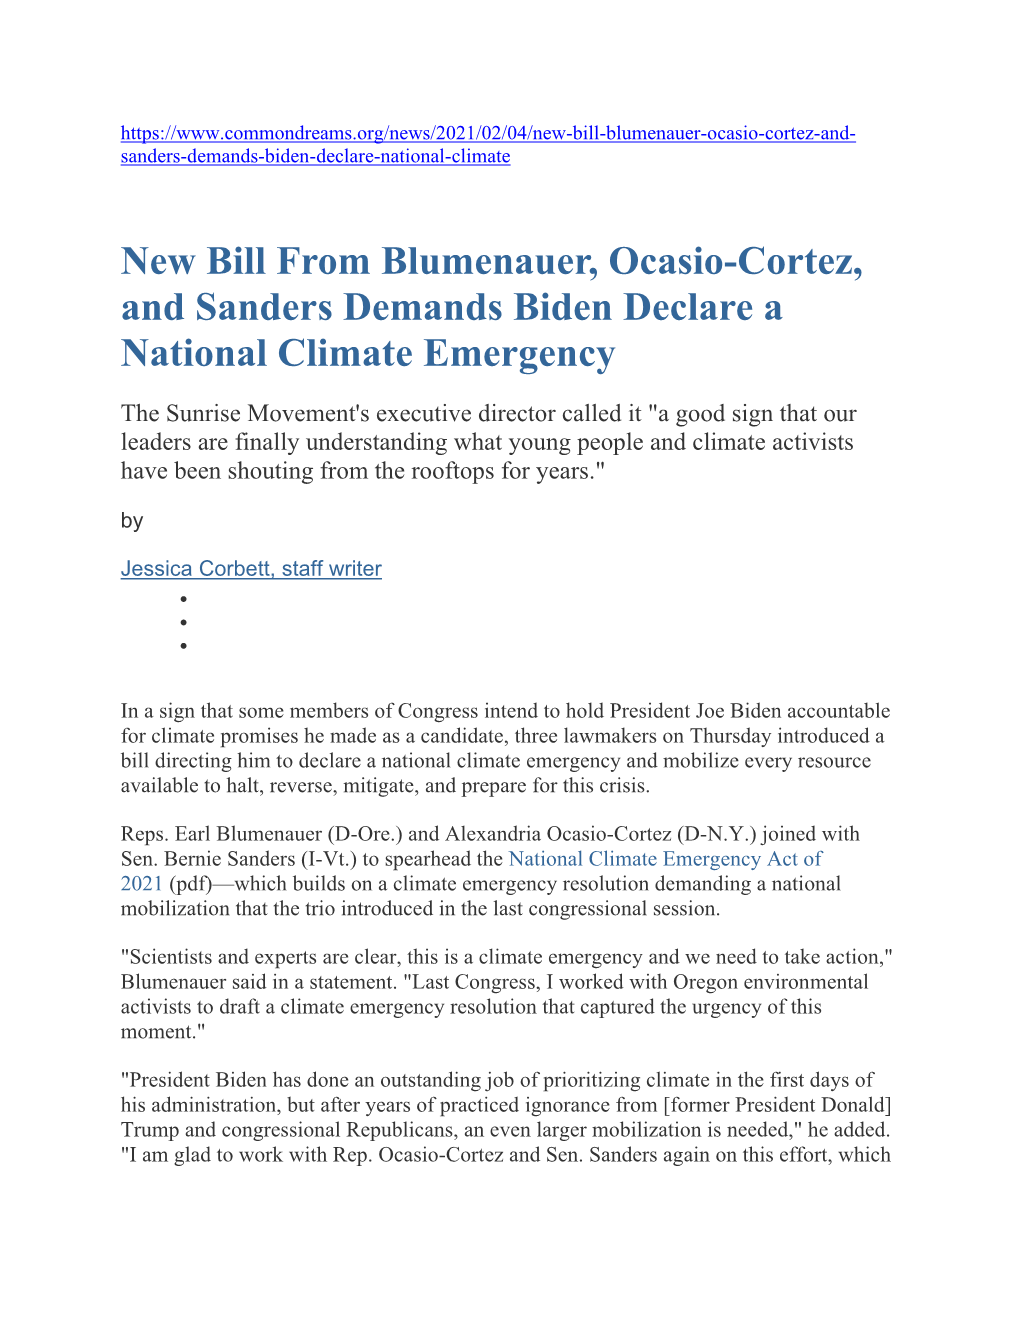 New Bill from Blumenauer, Ocasio-Cortez, and Sanders Demands Biden Declare a National Climate Emergency